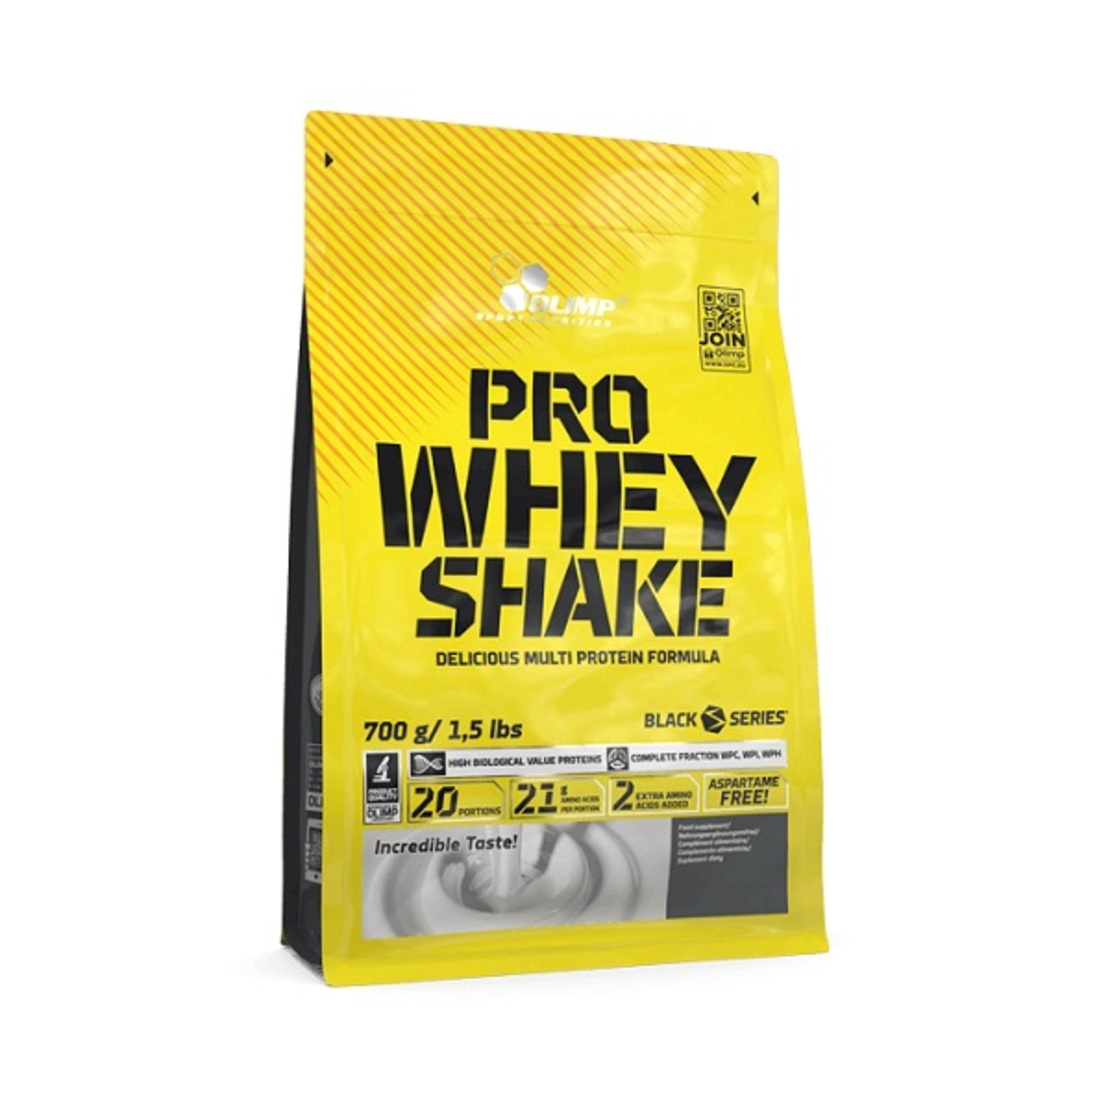 Olimp Pro Whey Shake 700 гр. + Creaine Monohydrate 500 гр.